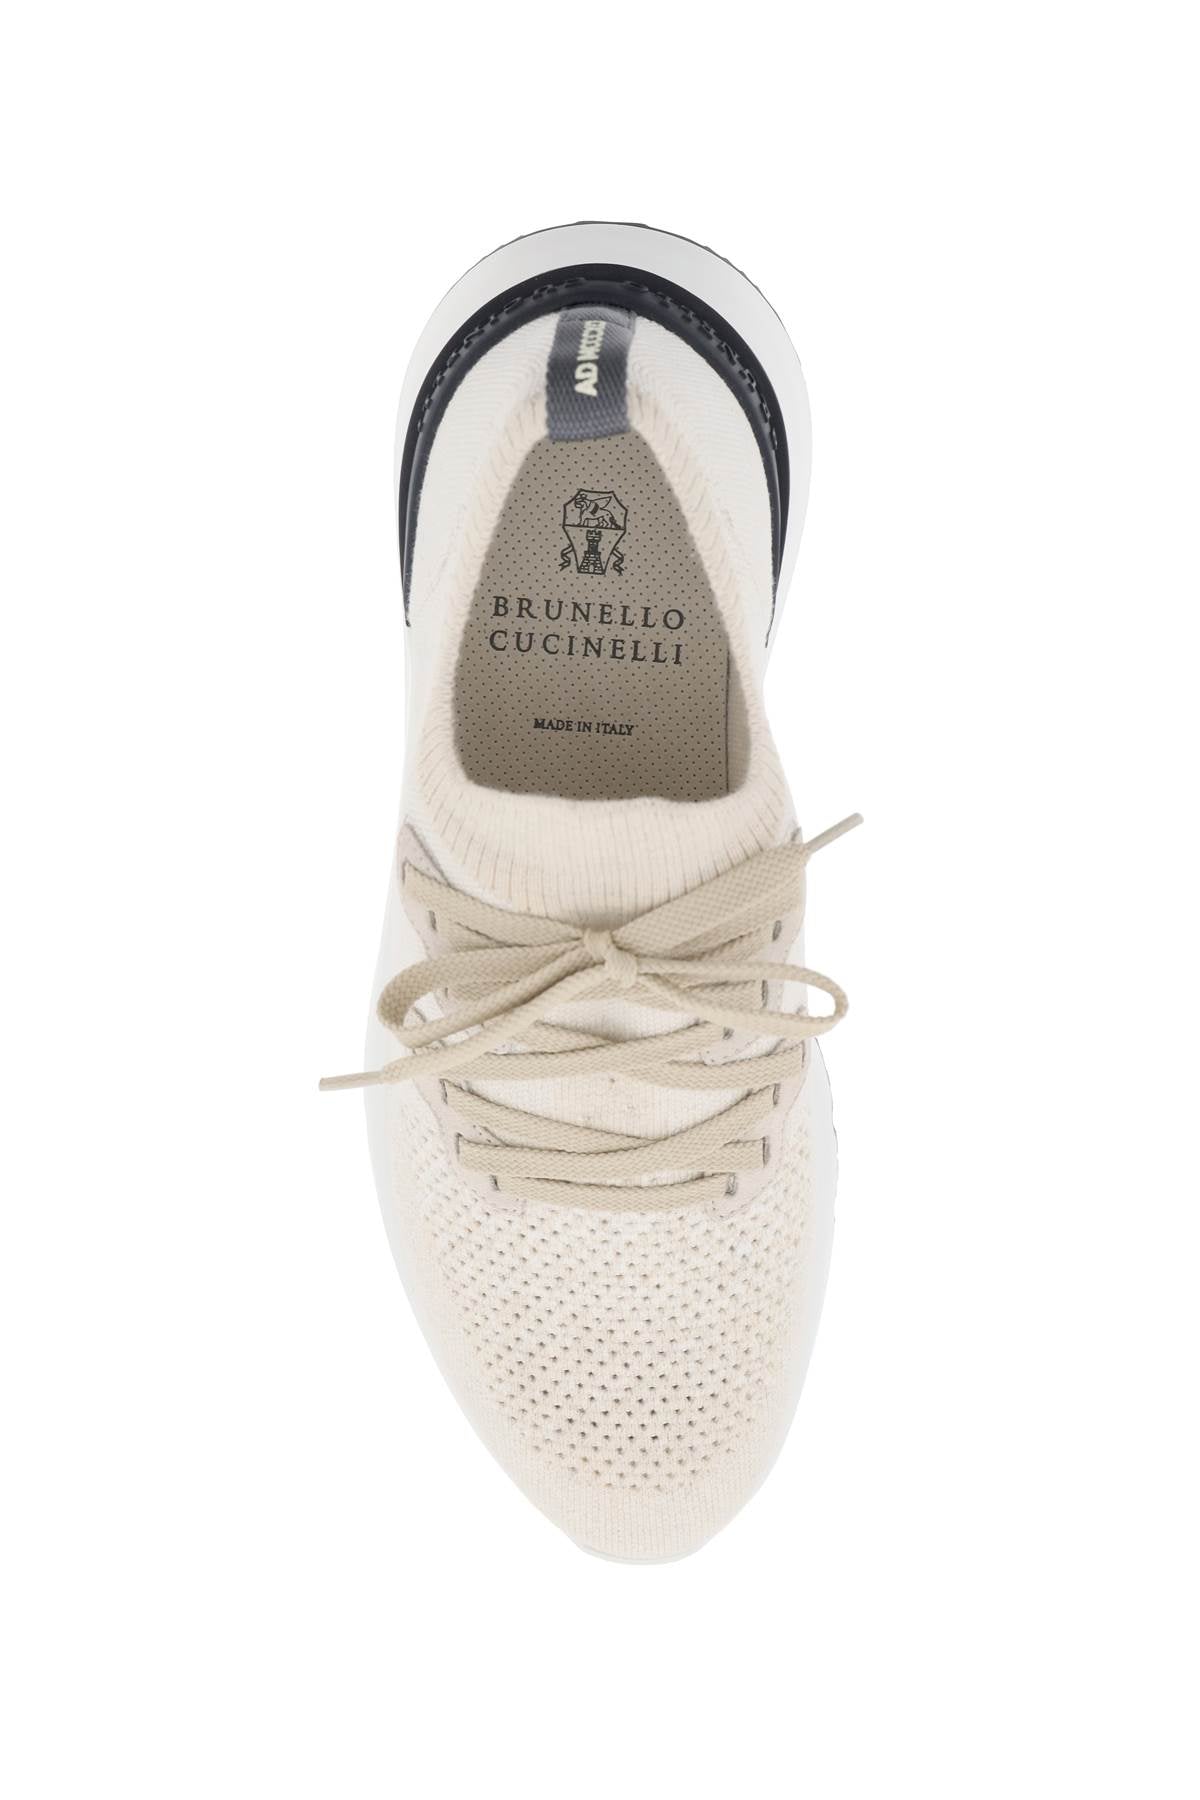 Brunello cucinelli knit chine sneakers in-men > shoes > sneakers-Brunello Cucinelli-Urbanheer